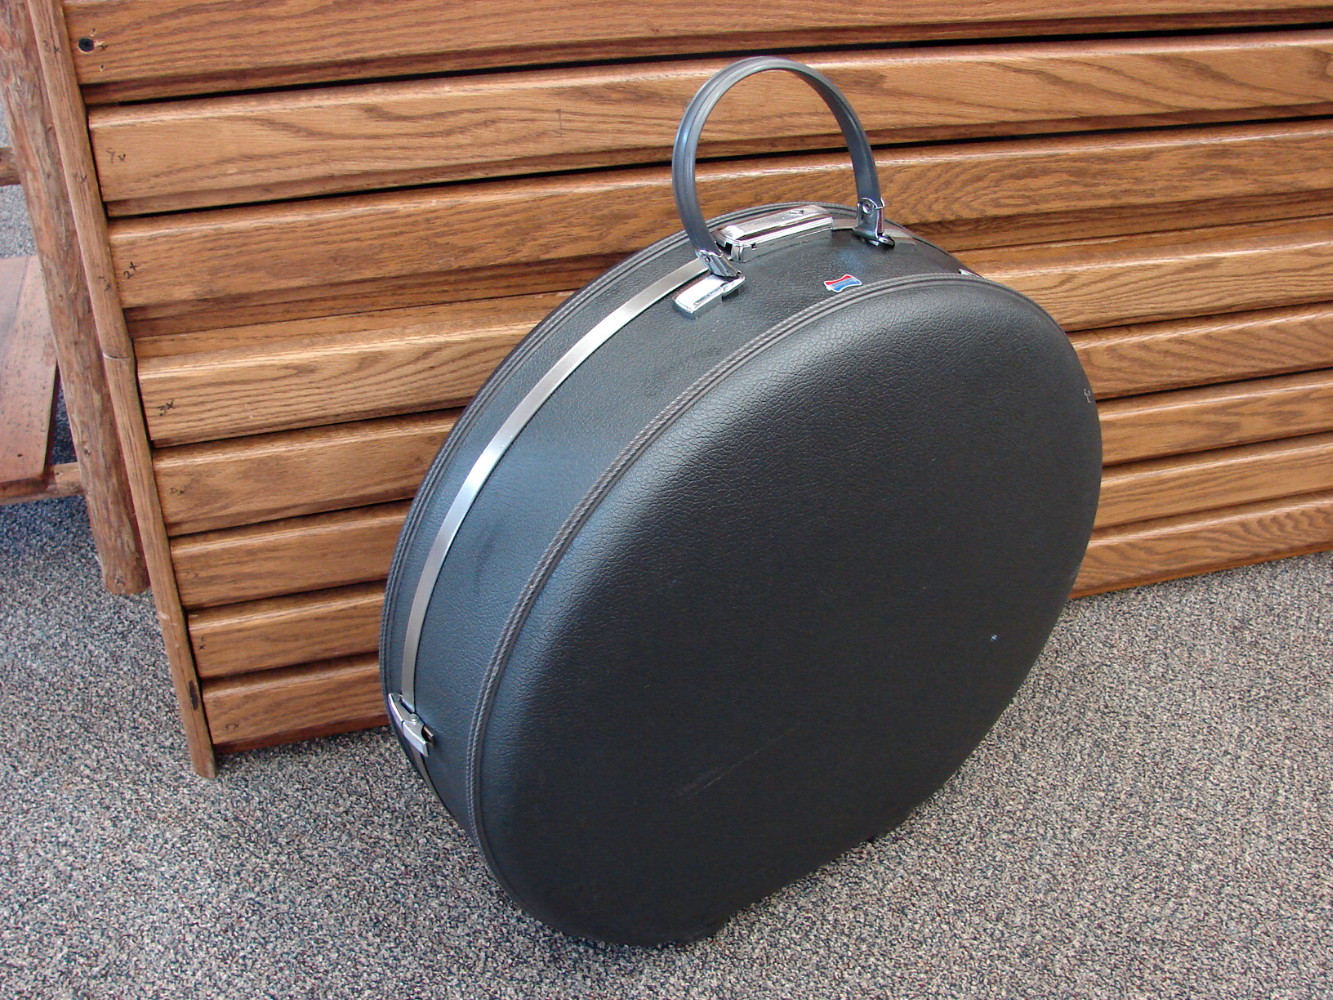 hat box luggage